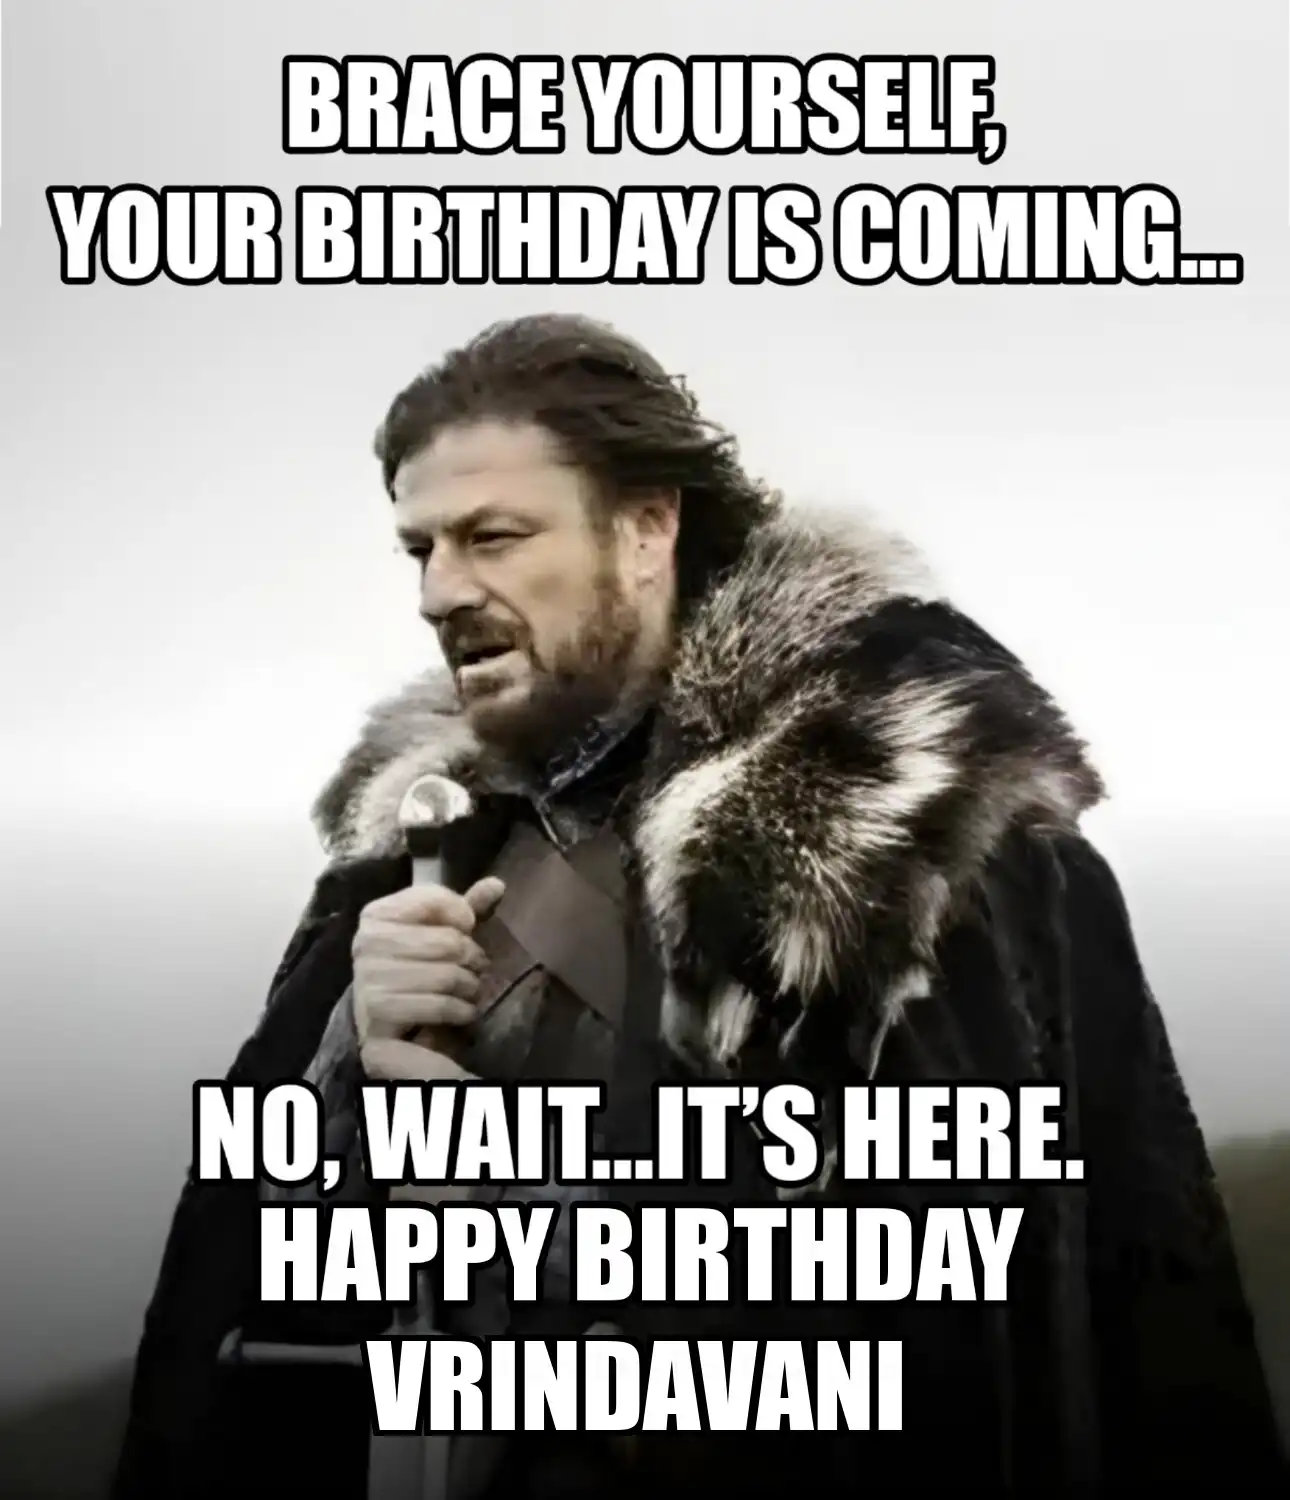 Happy Birthday Vrindavani Brace Yourself Your Birthday Is Coming Meme